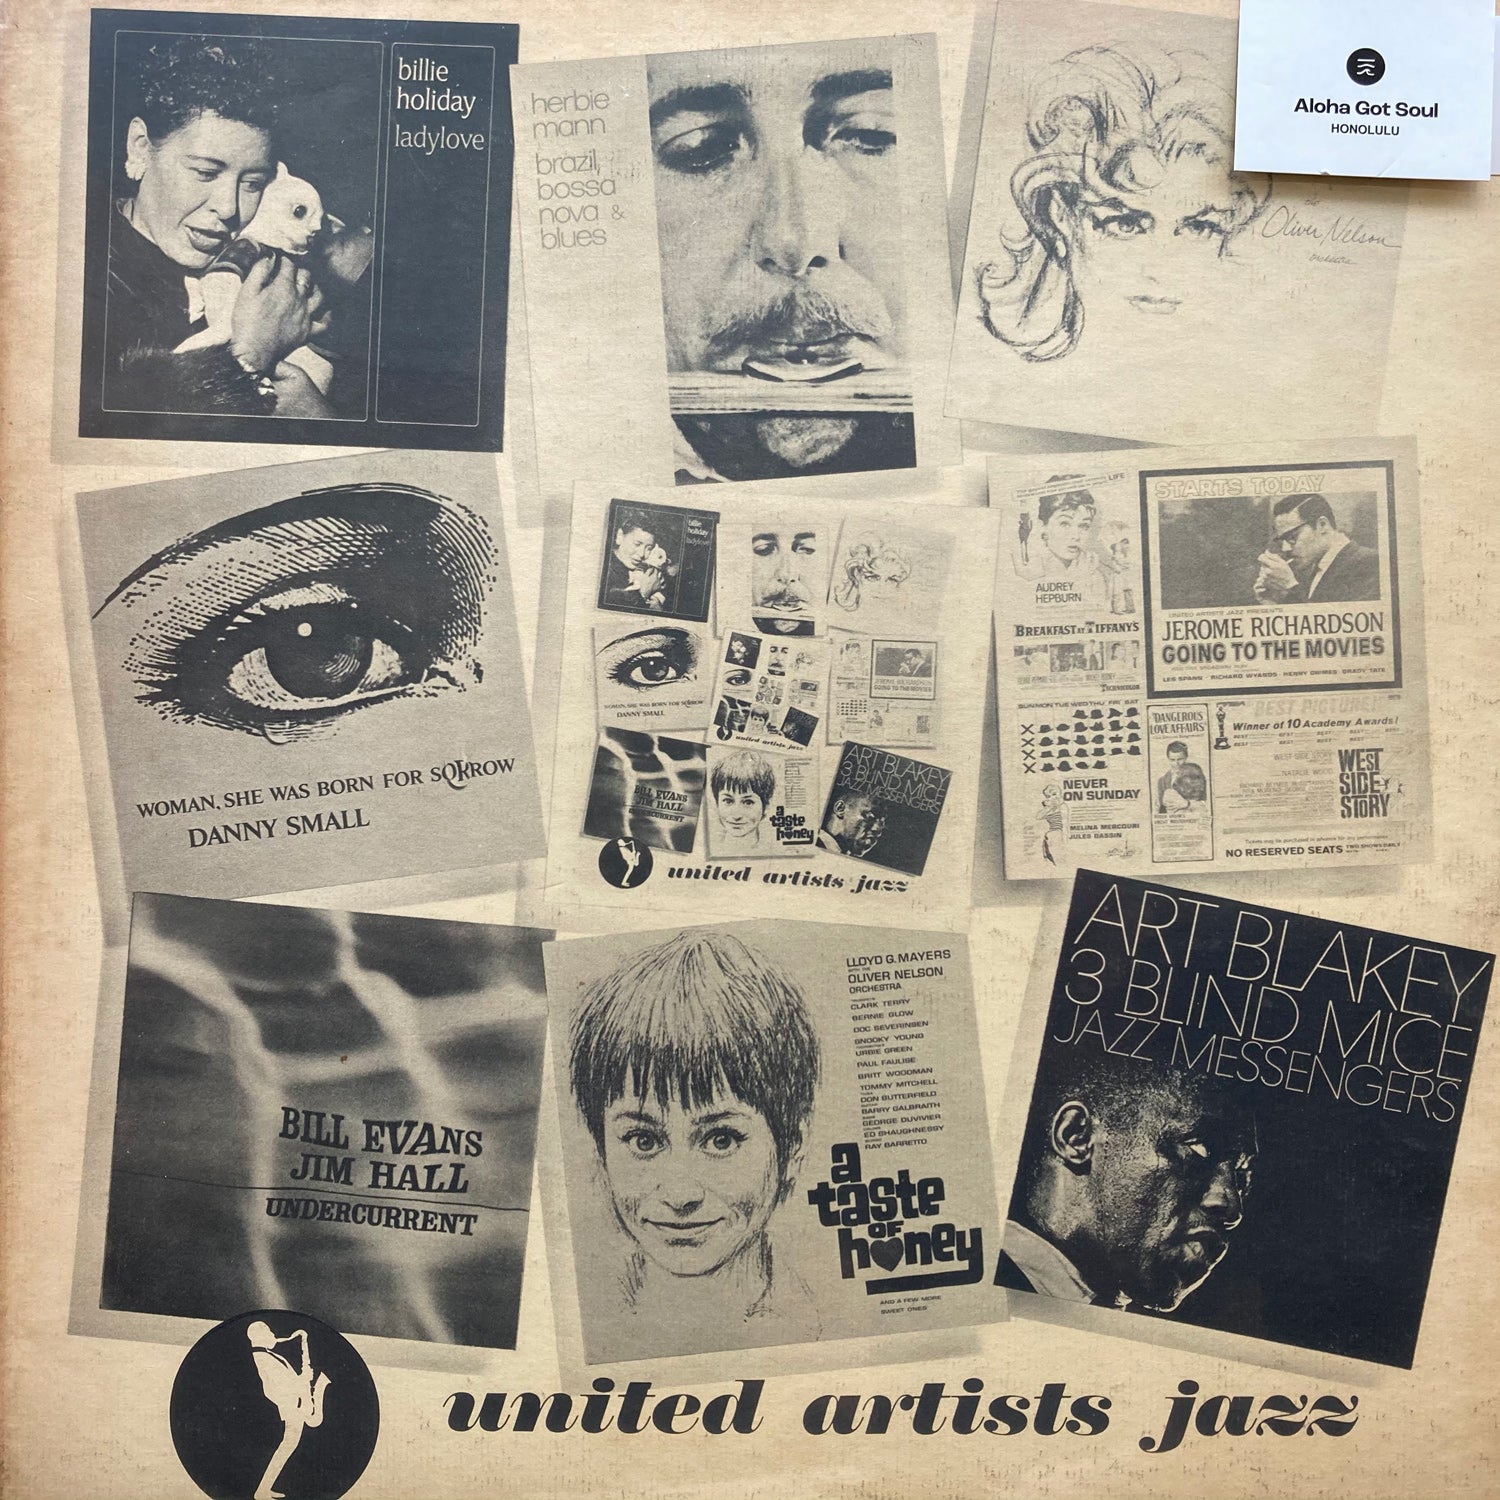 United Artists Jazz